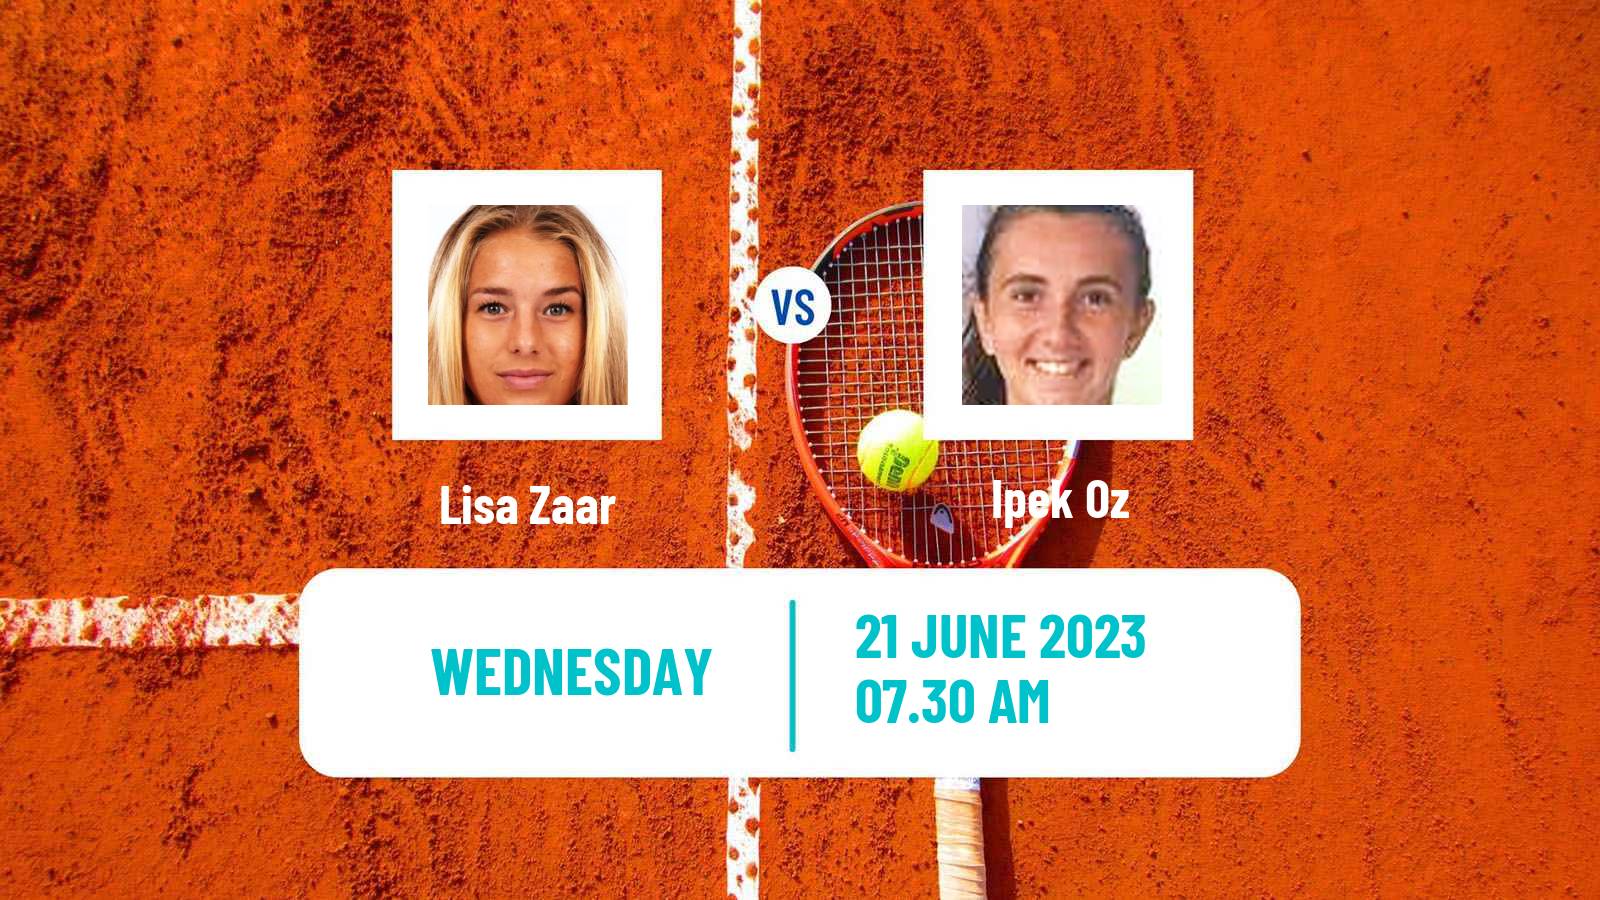 Tennis ITF W40 Ystad Women Lisa Zaar - Ipek Oz